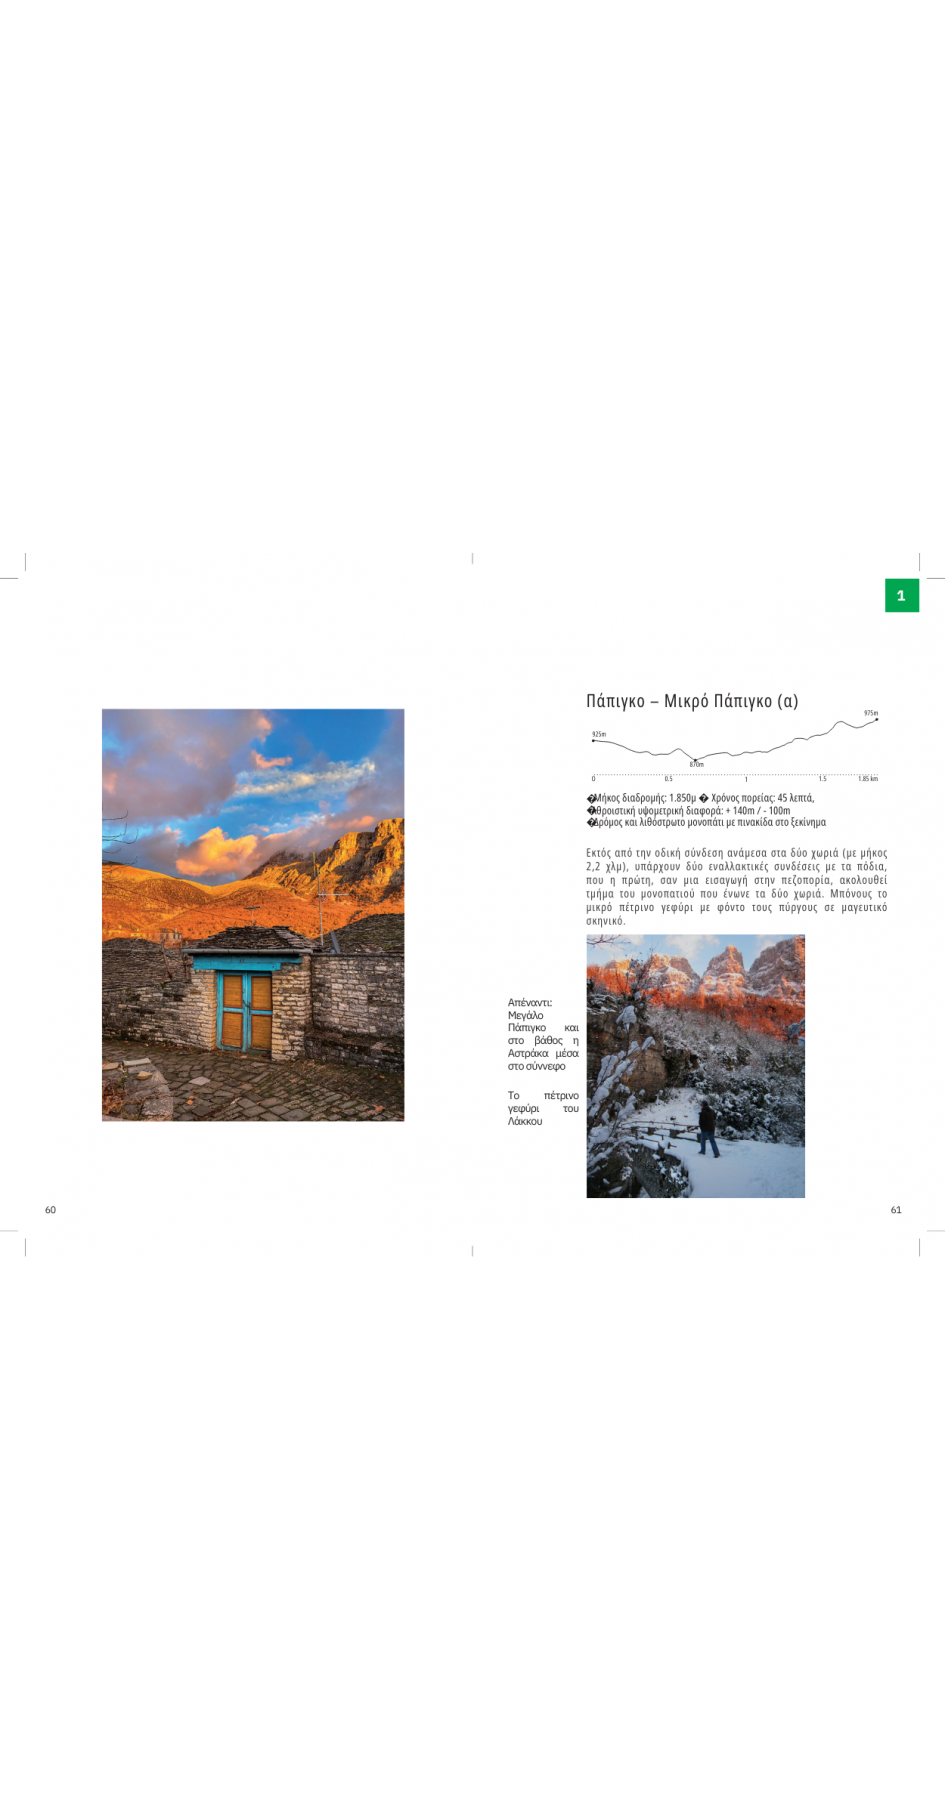 My Zagori - Landscape and Hikes (book in Greek)